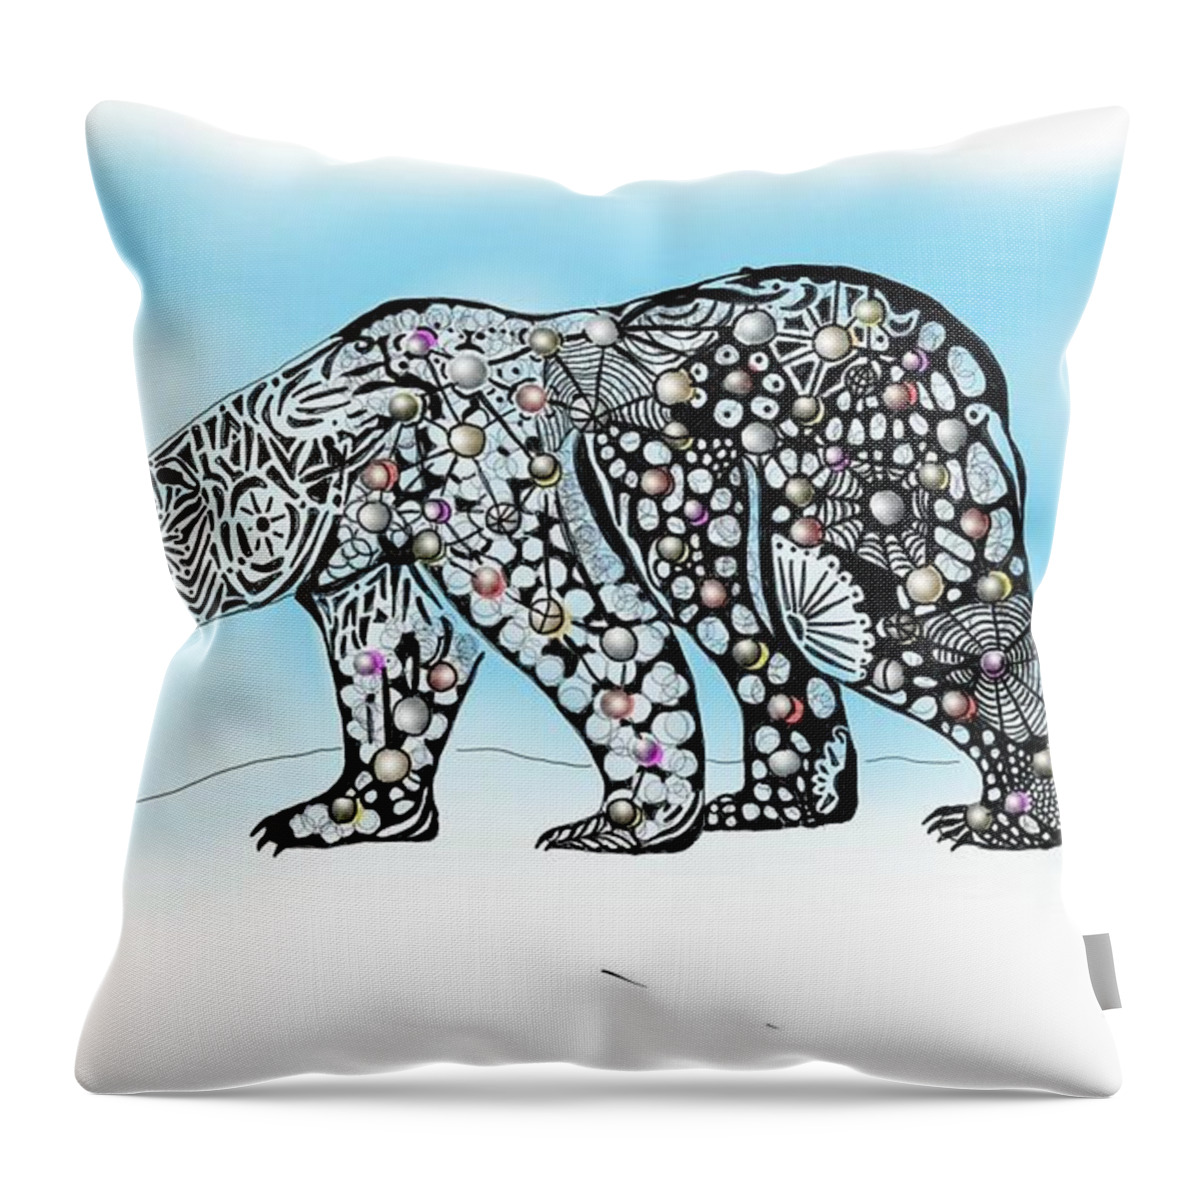 Doodle Throw Pillow featuring the digital art Polar bear doodle by Darren Cannell